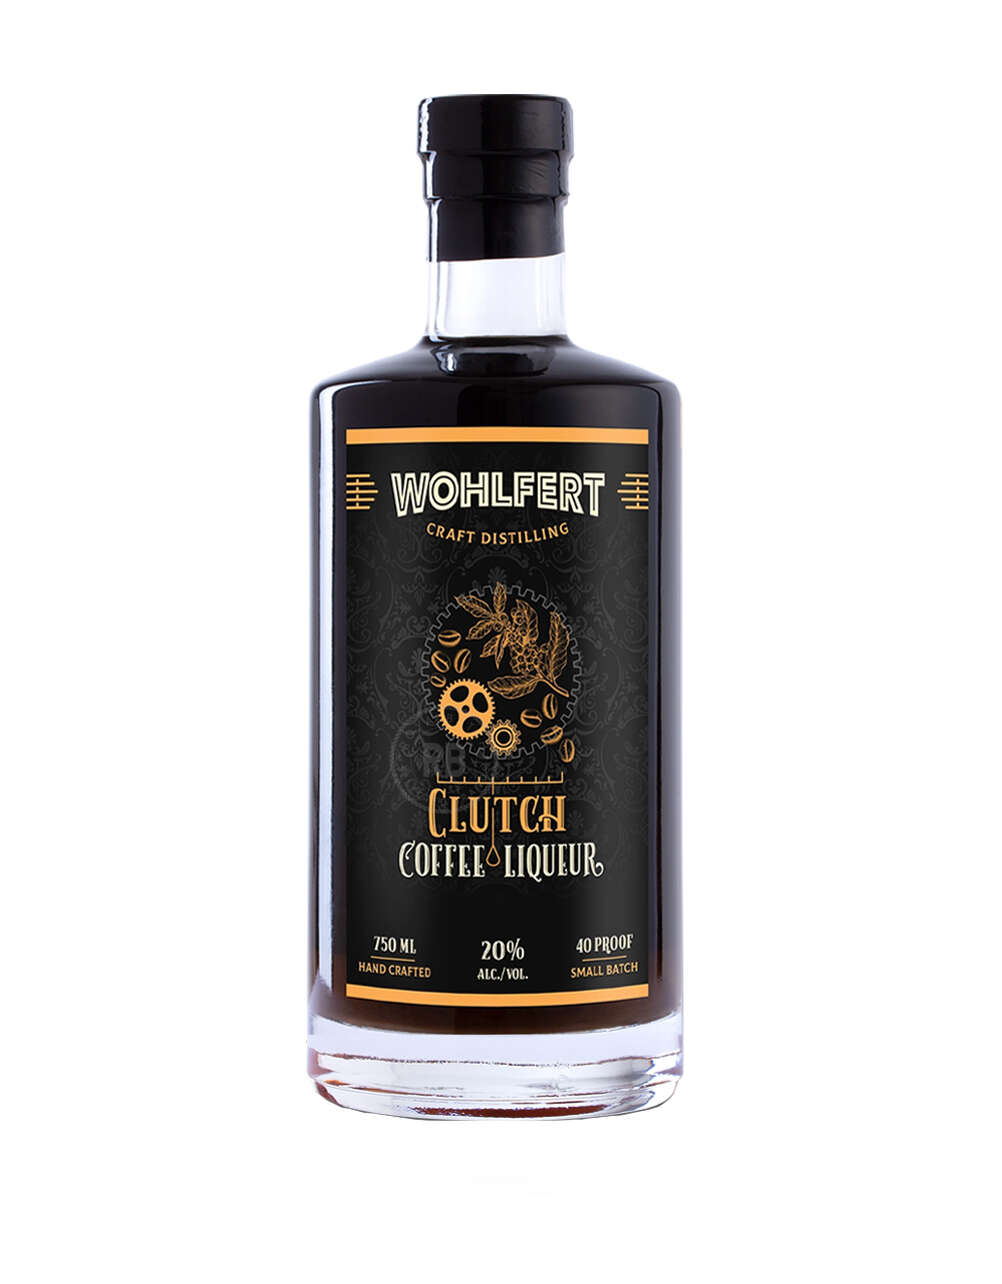 Wohlfert Craft Distilling Clutch Coffee Liqueur